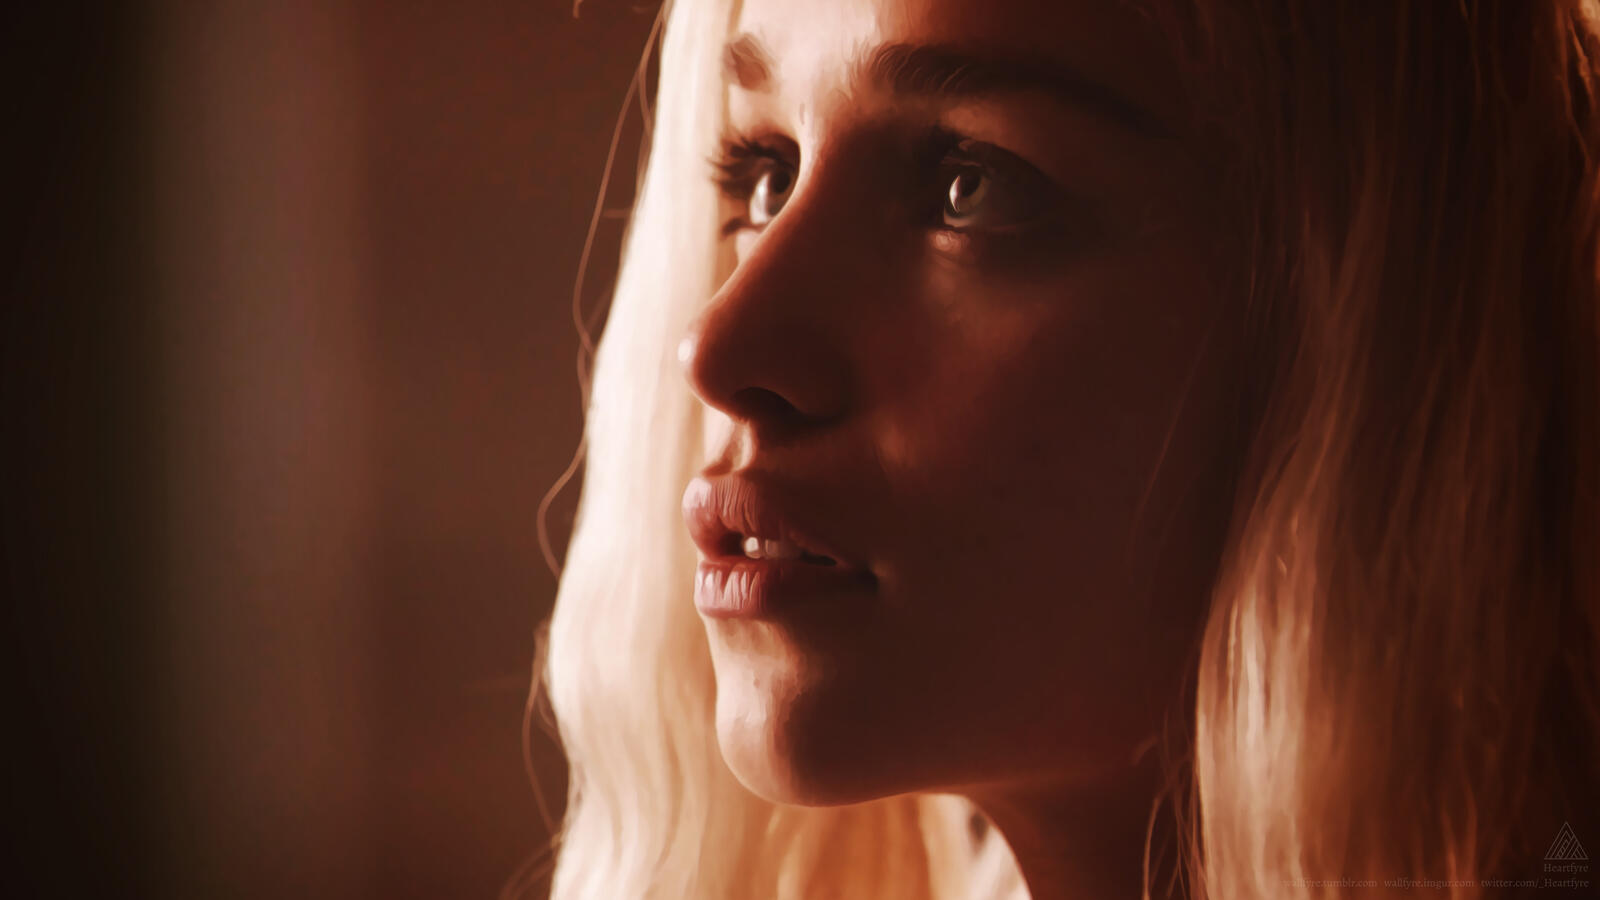 Wallpapers Daenerys Targaryen Emilia Clarke Game Of Thrones on the desktop